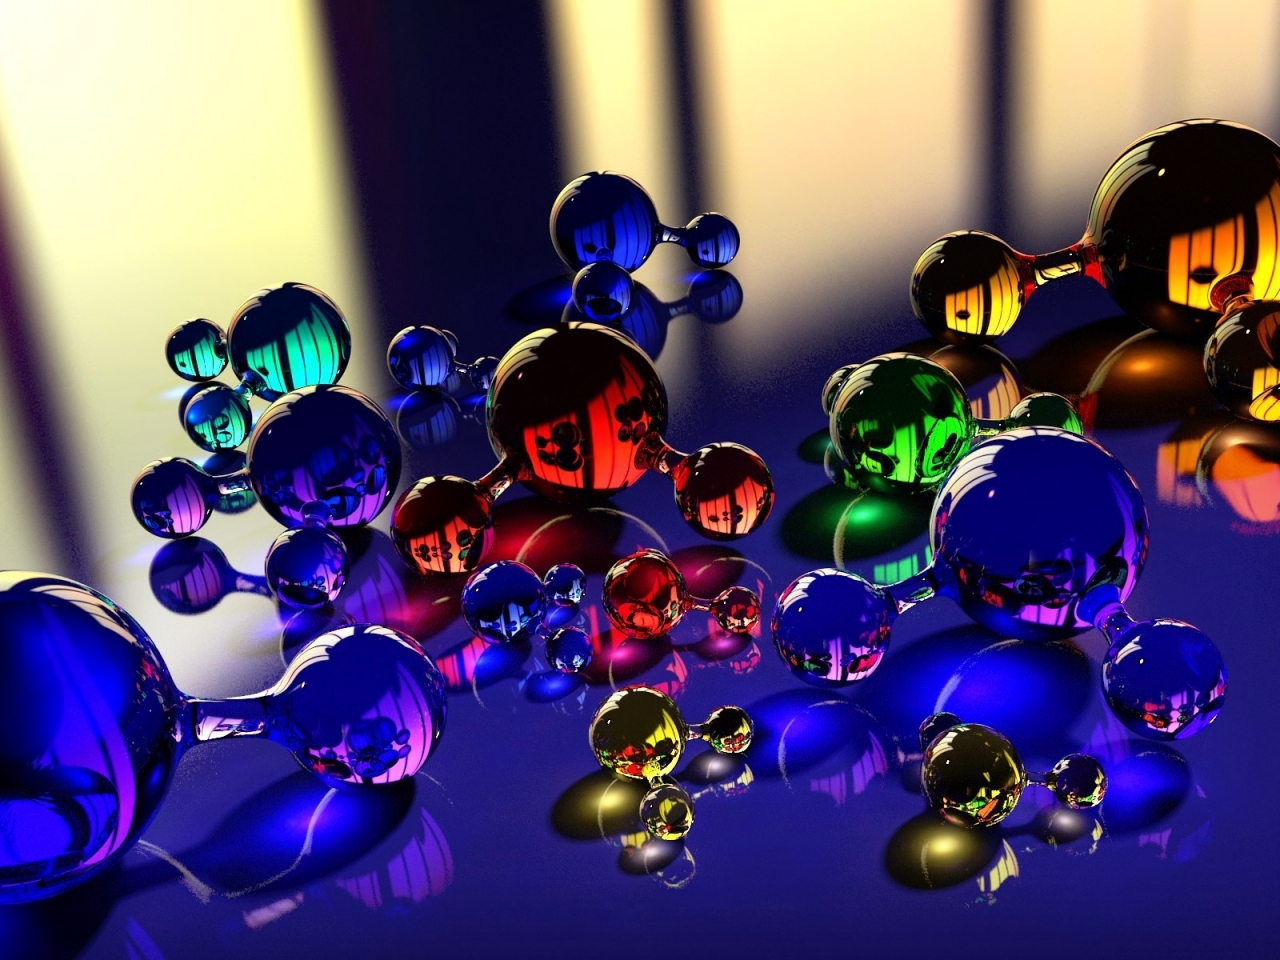 Molecule Stress Ball for 1280 x 960 resolution